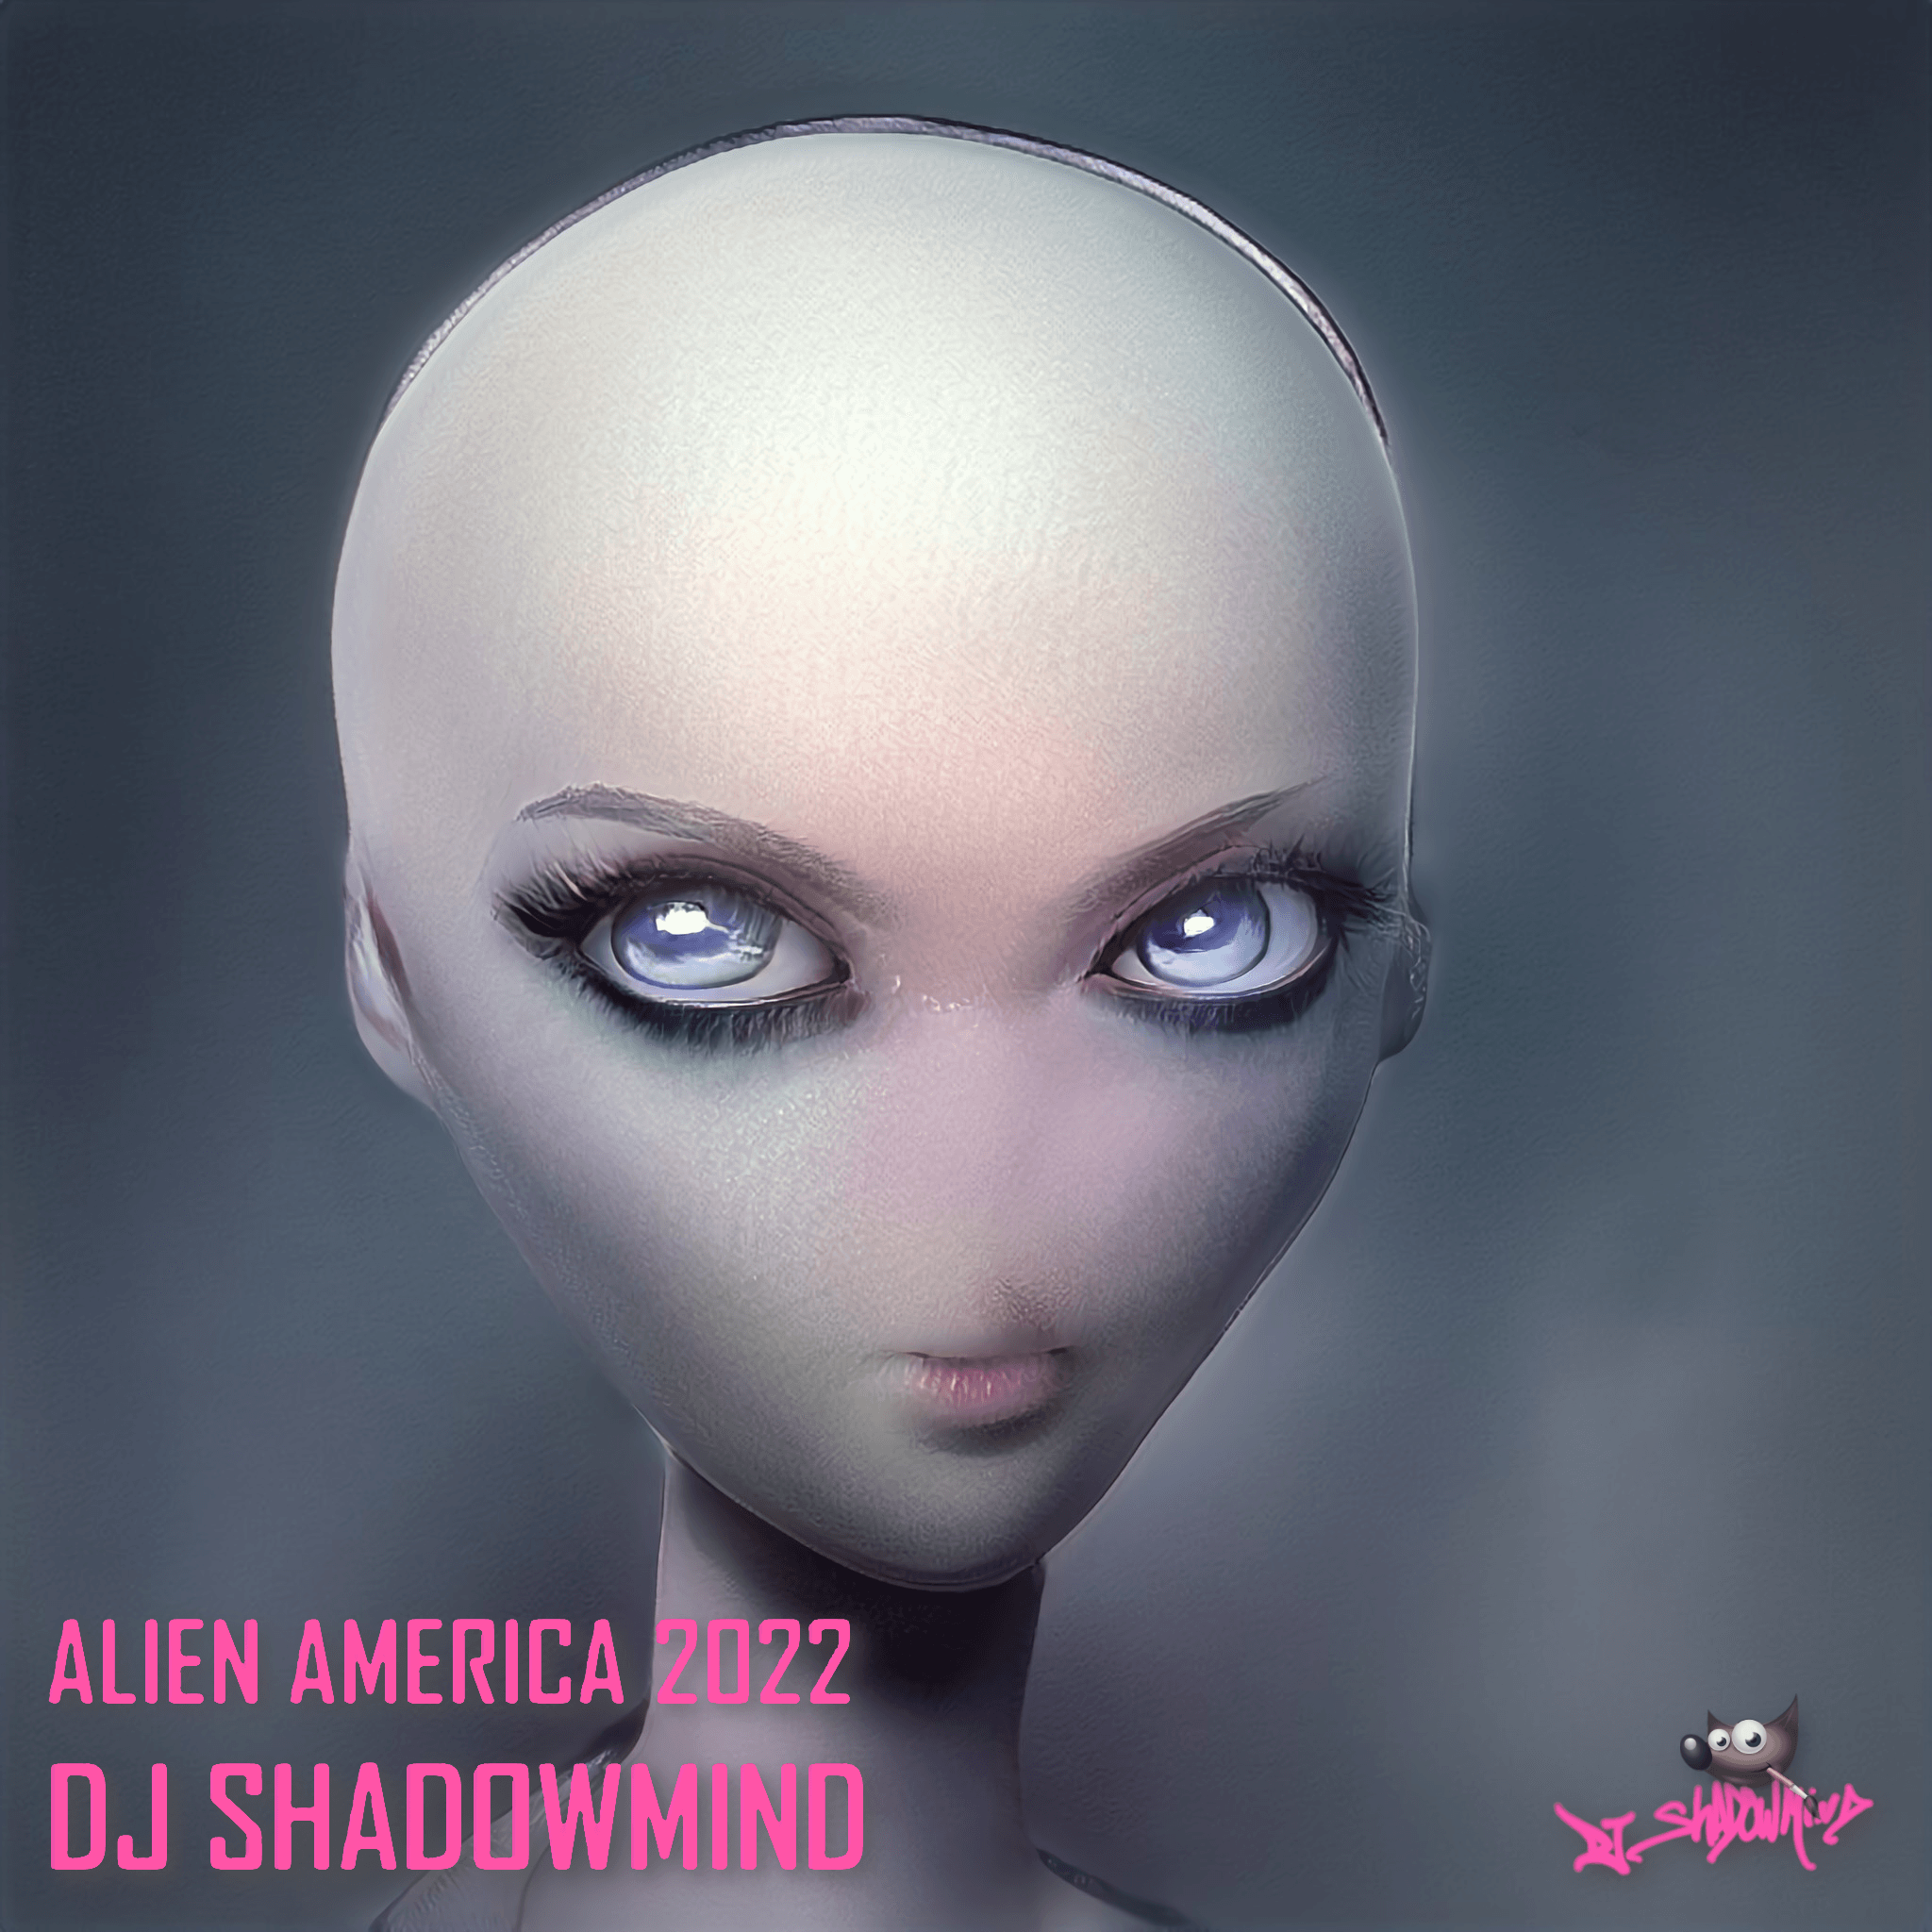 Alien America 2022 - Agent 163